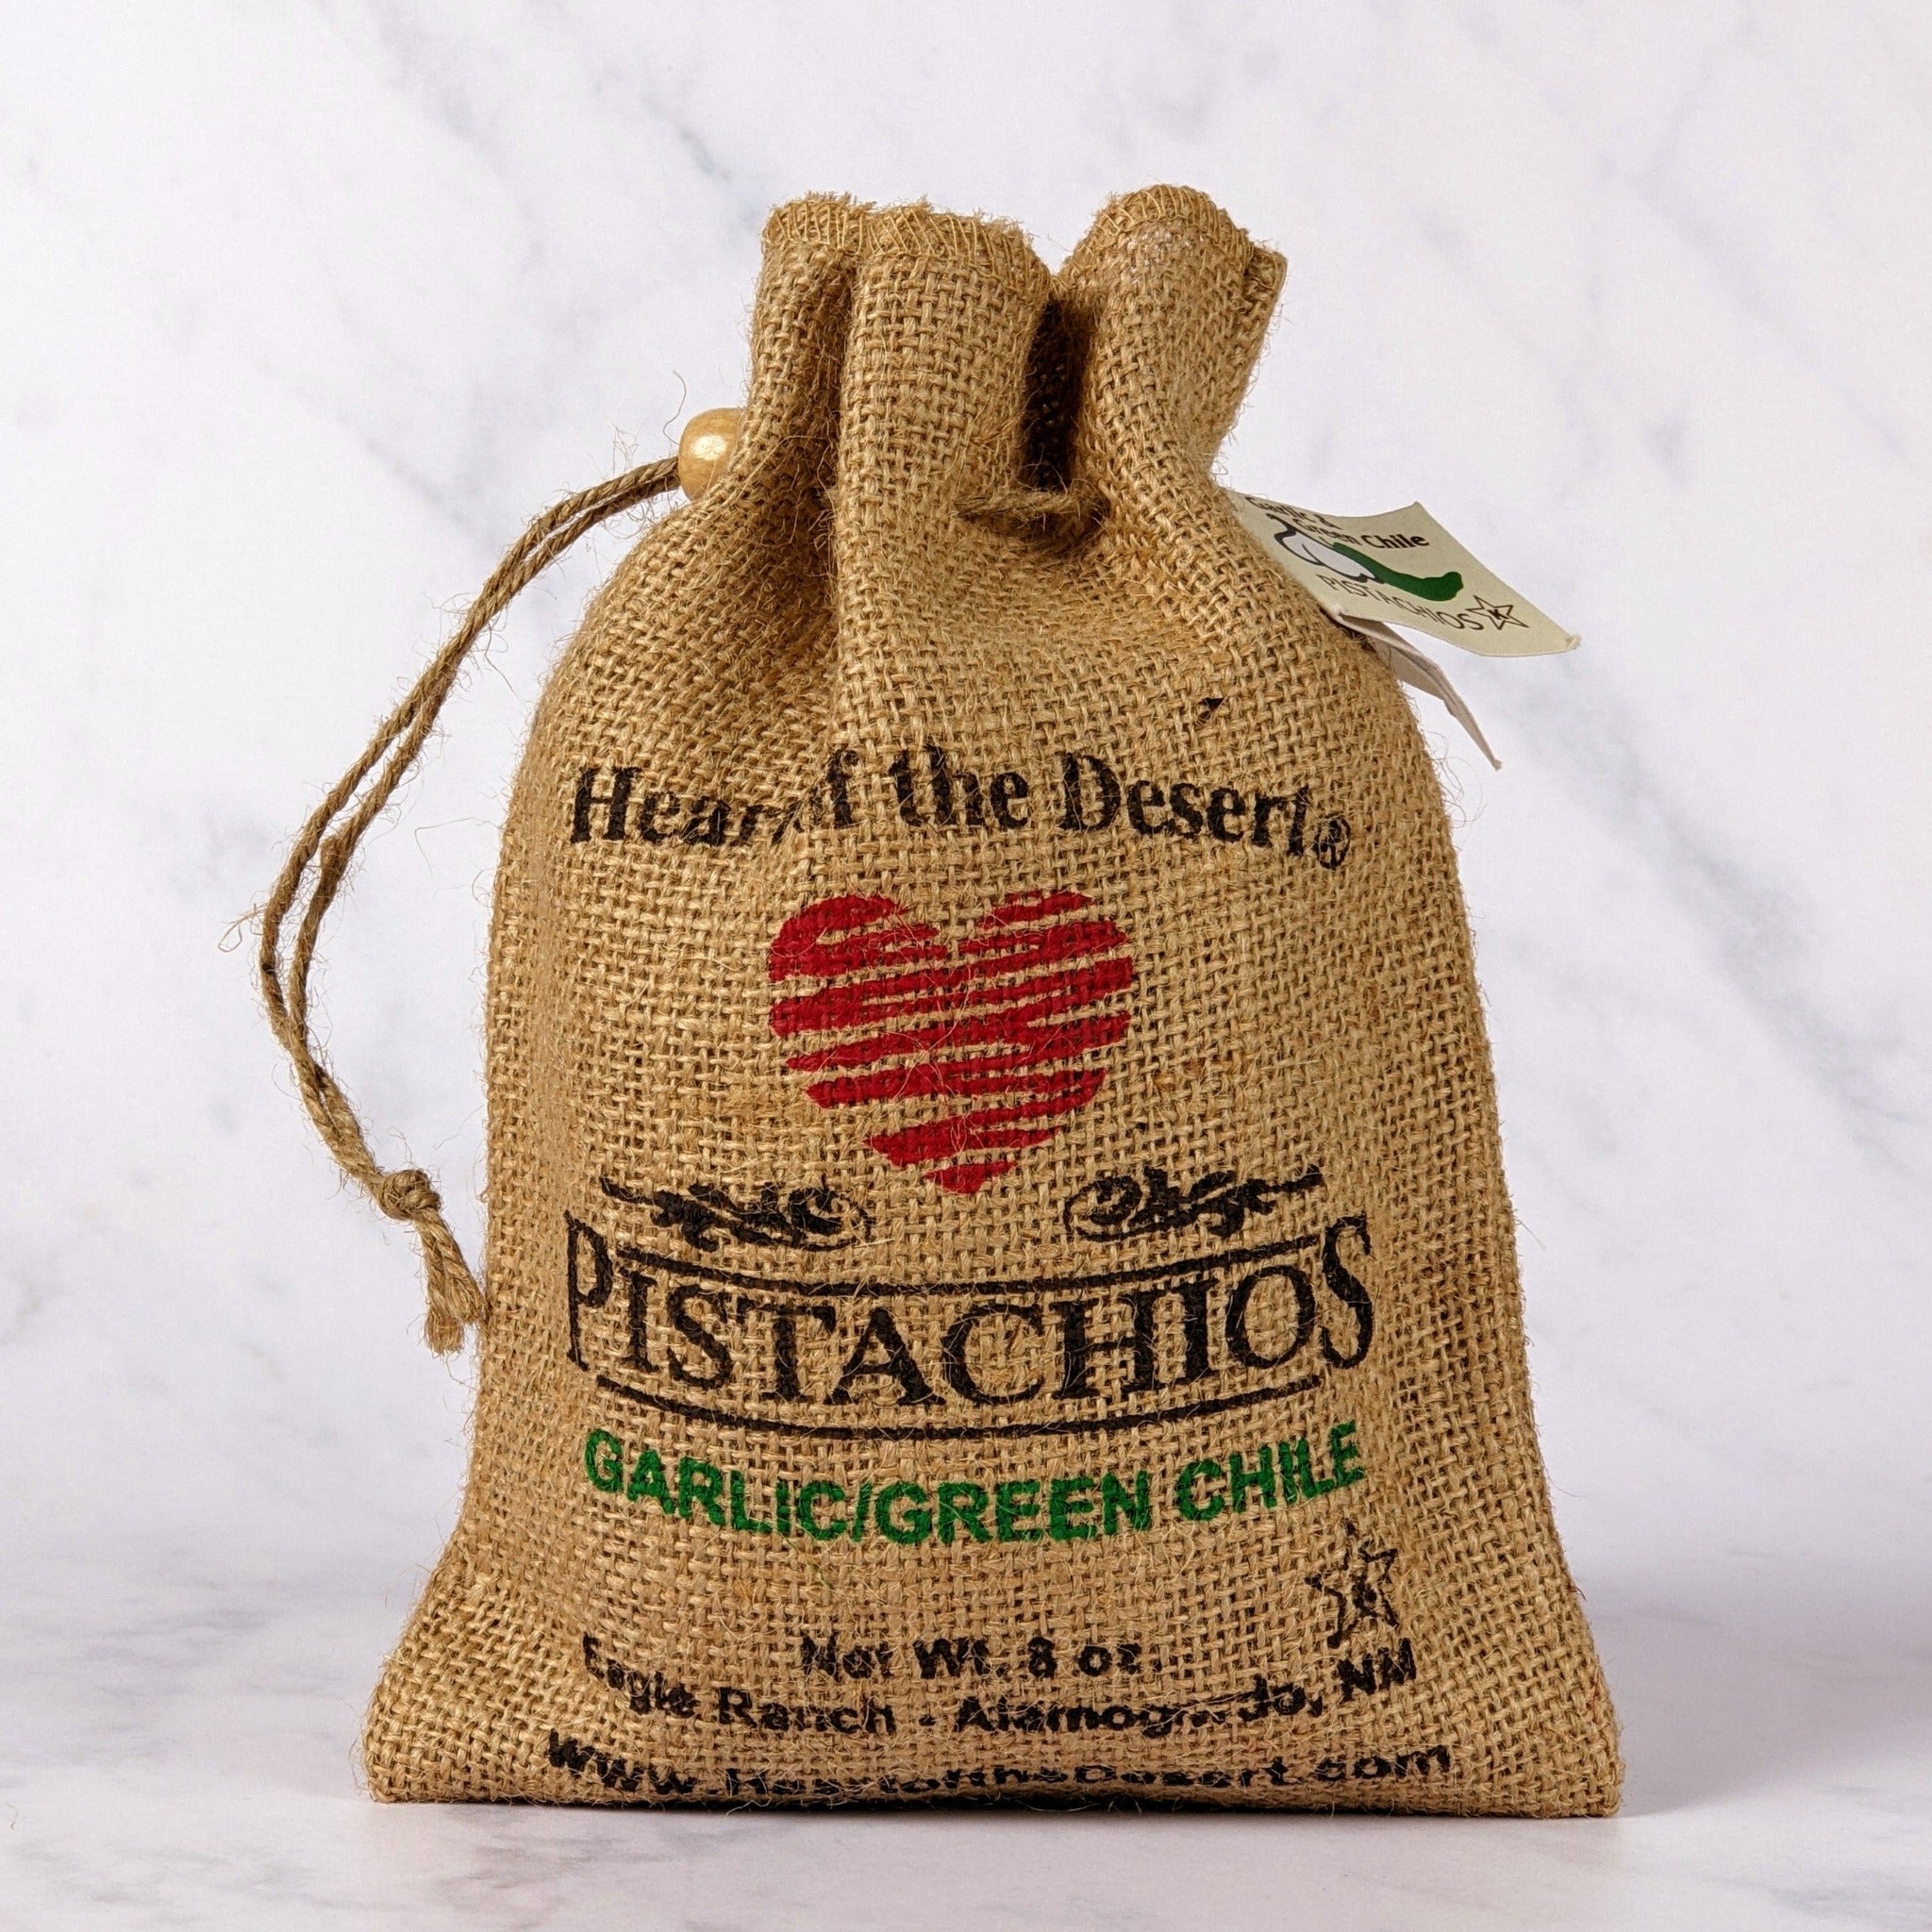 Heart of the Desert Garlic/Green Chile Pistachios